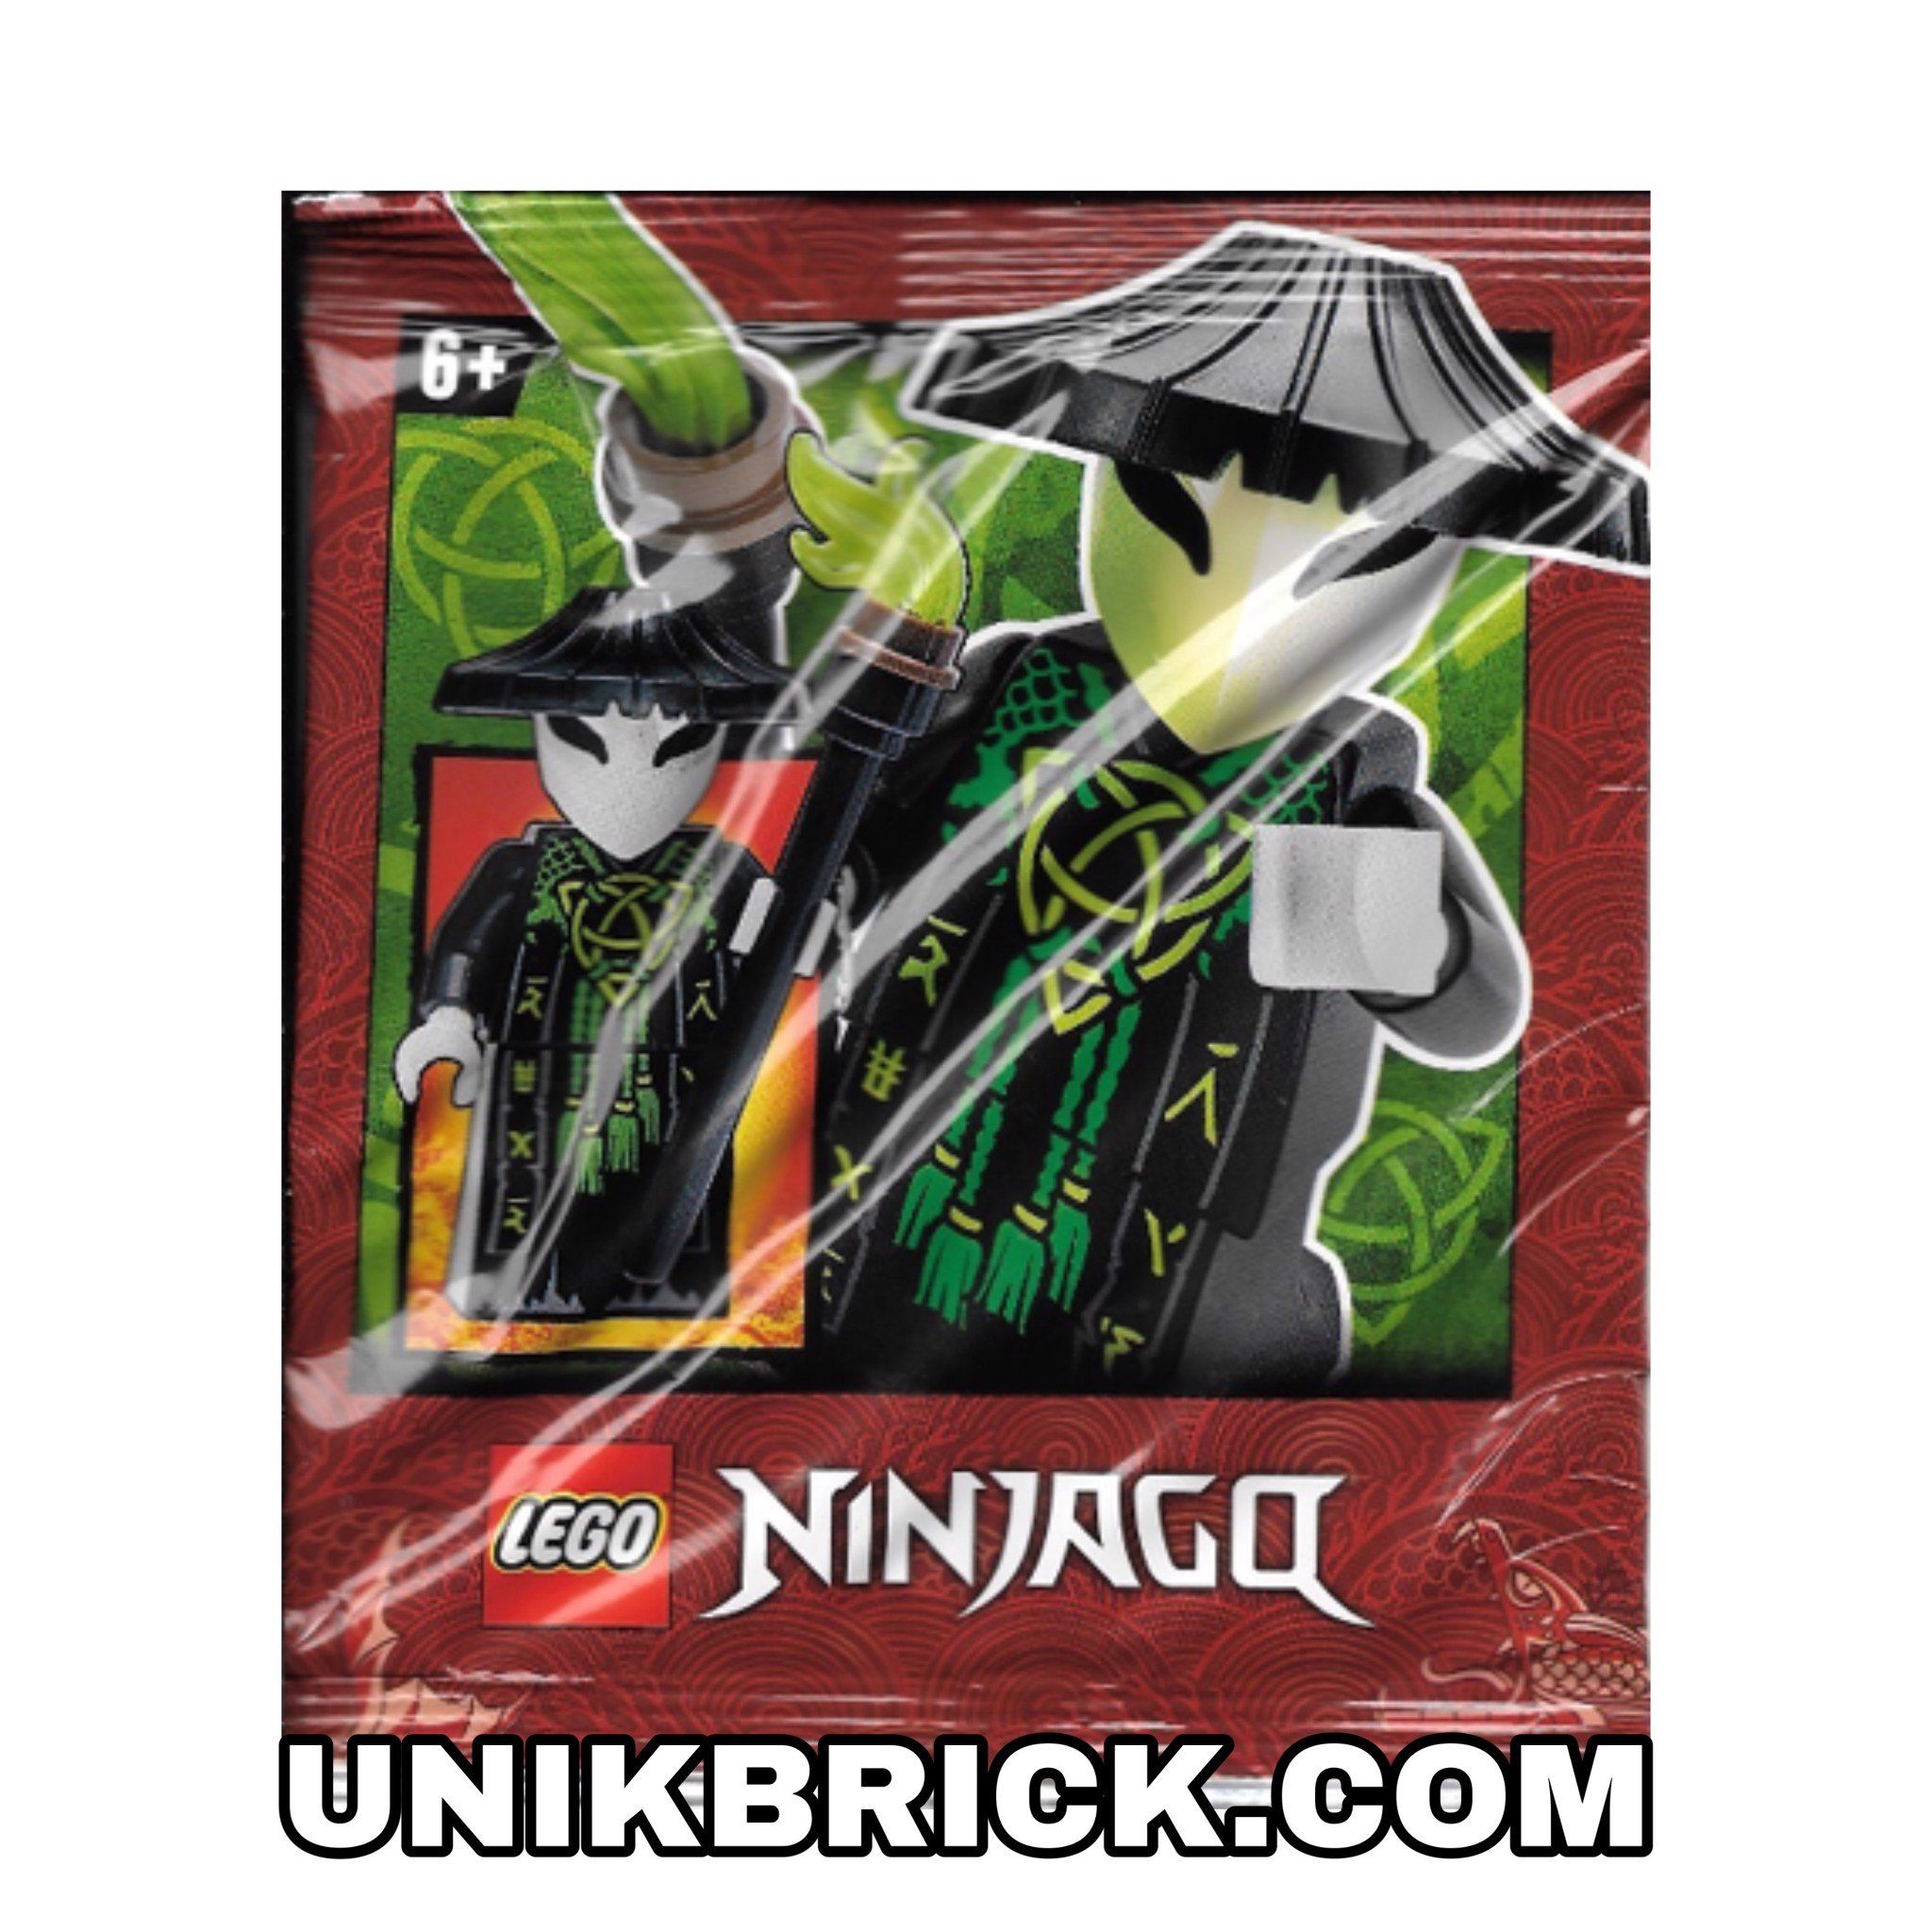 LEGO Ninjago 892174 Skull Sorcerer Foil Pack Polybag